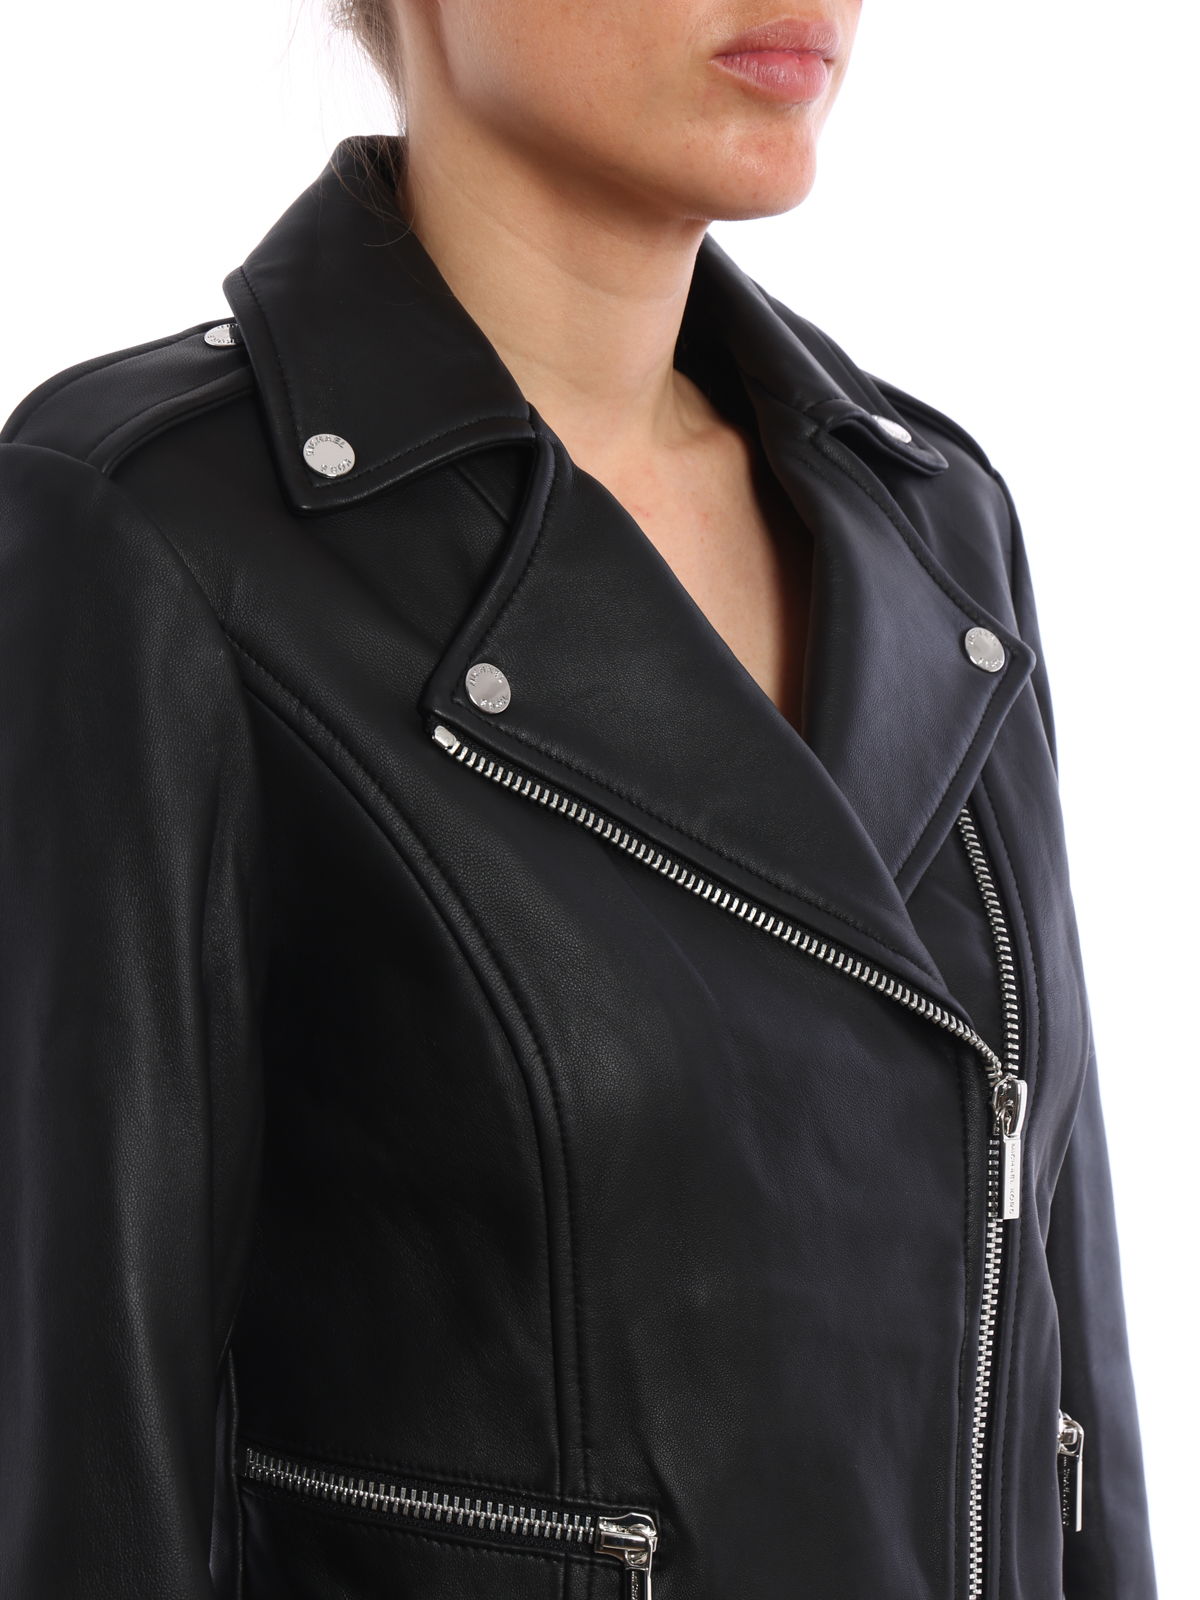 Michael Kors Petite Leather Moto Jacket Created for Macys  Macys